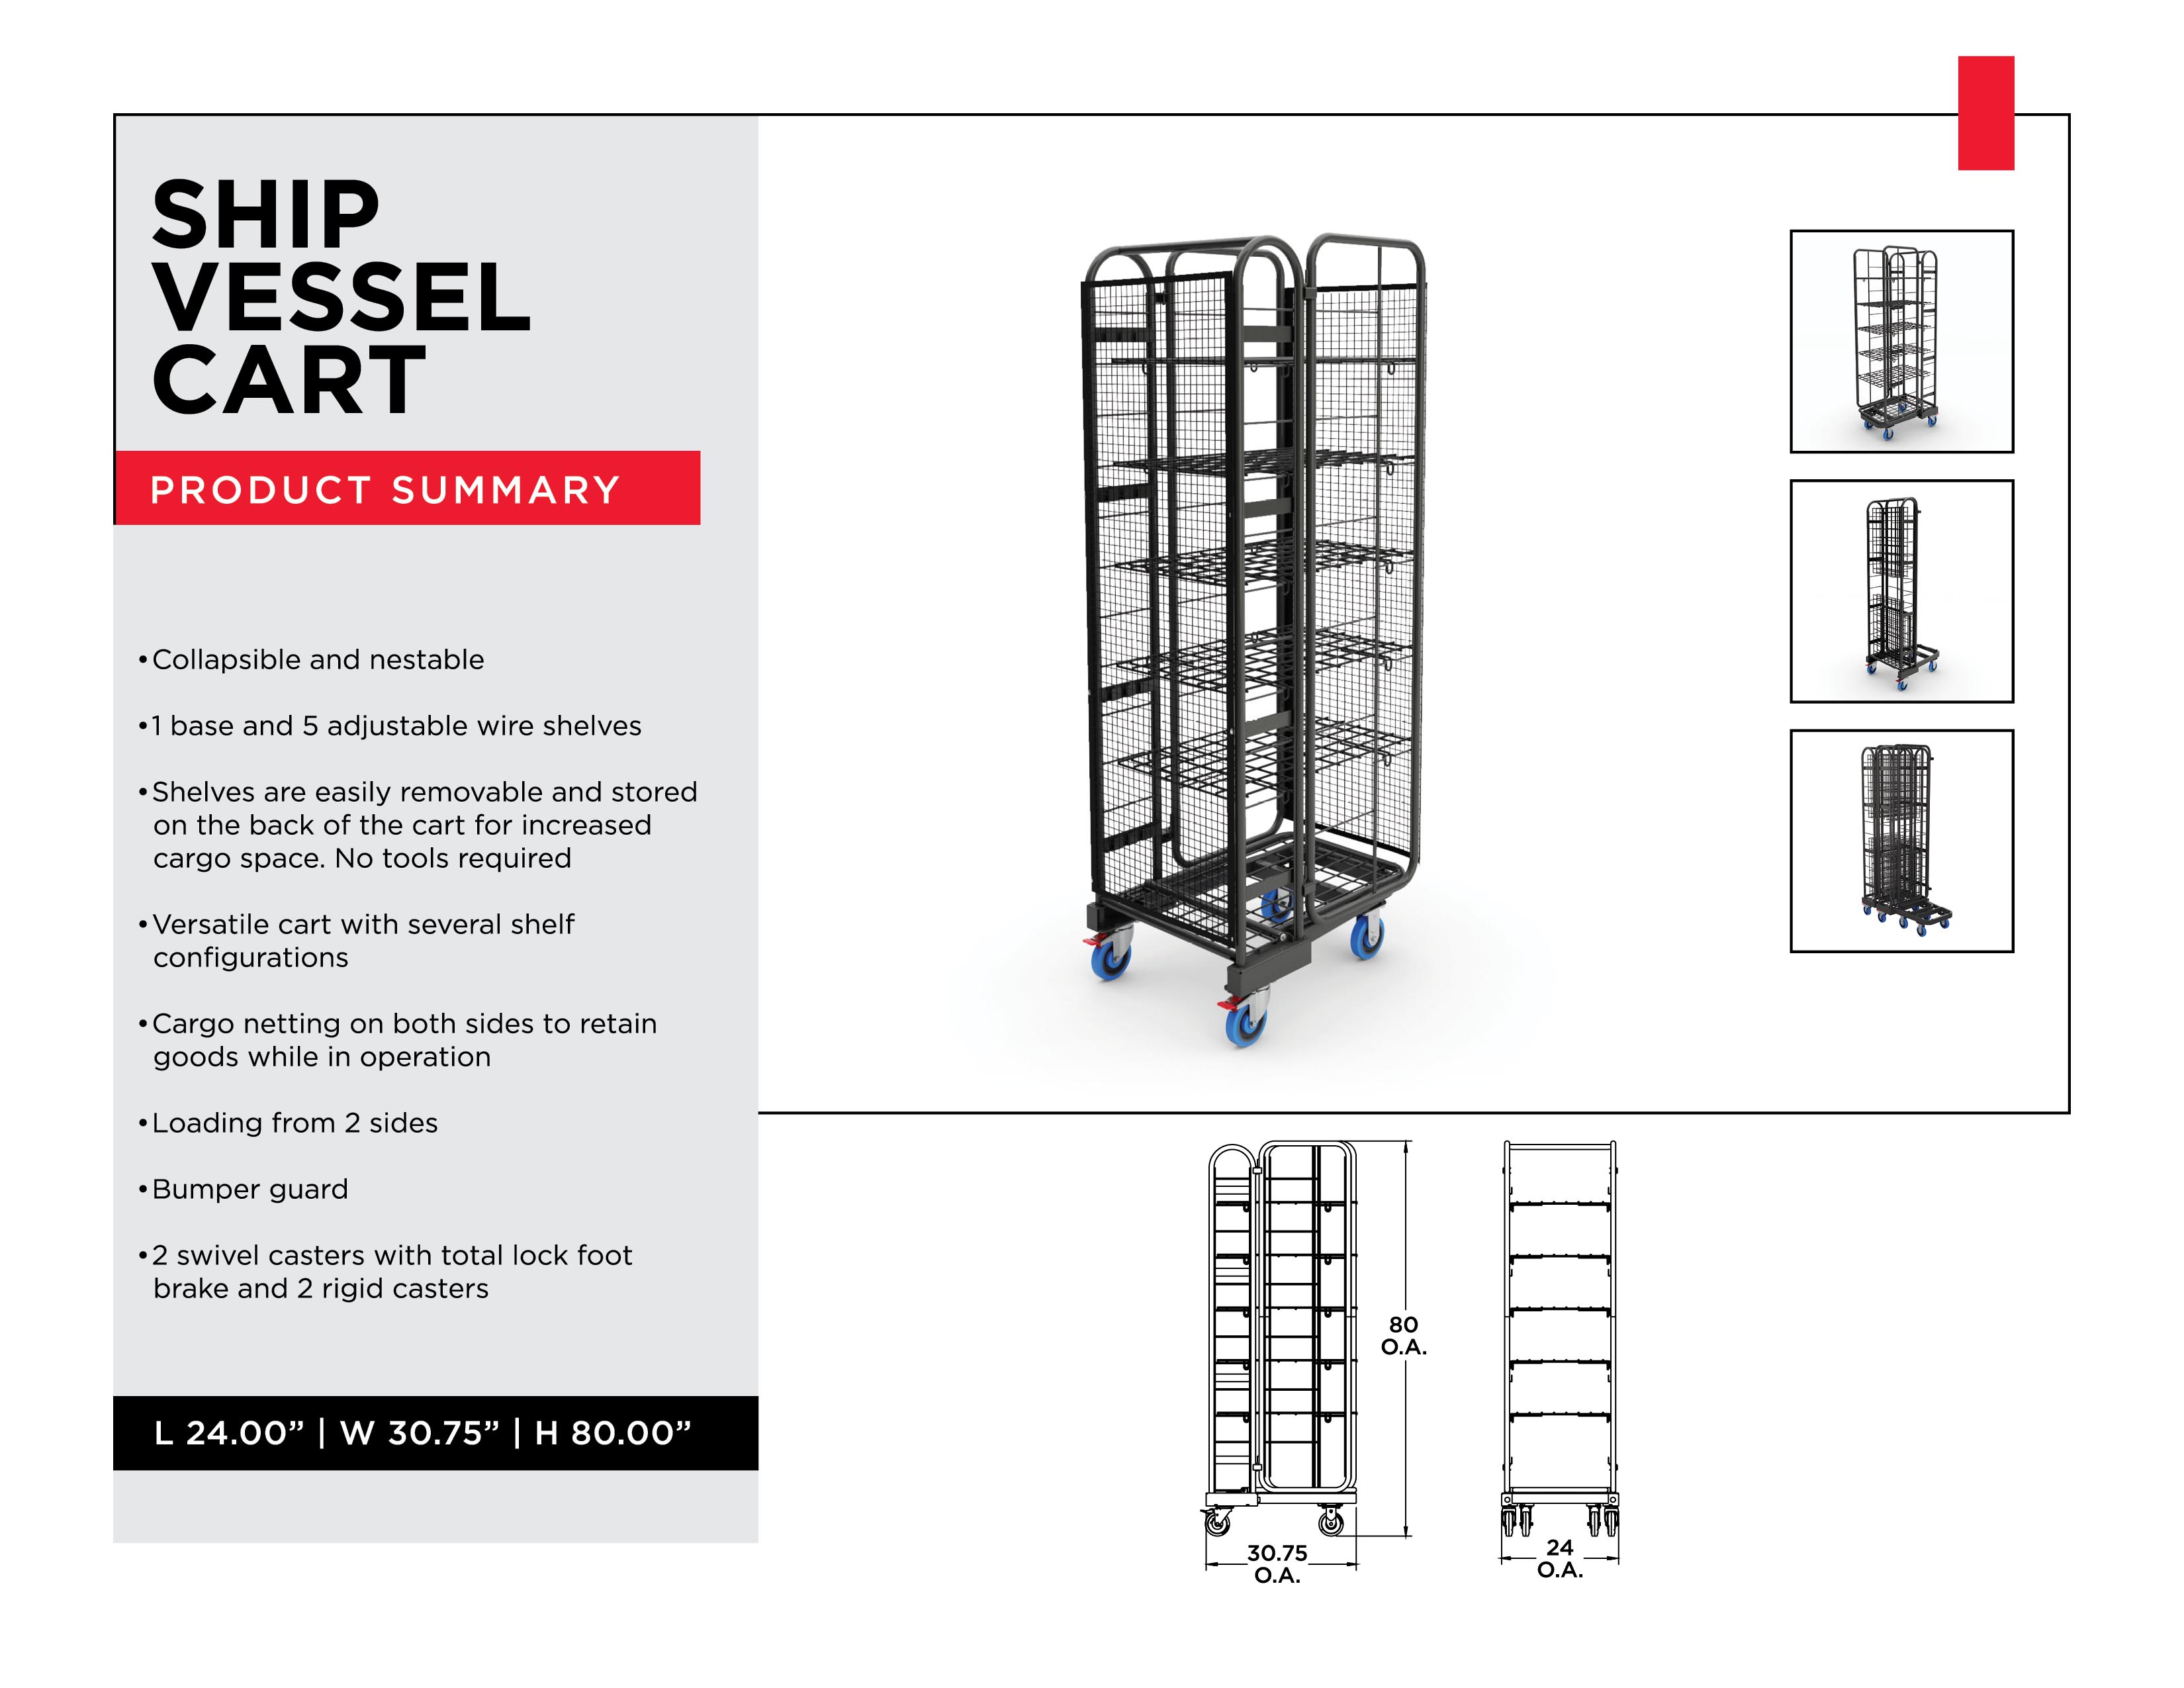 Inventory Distribution Mangement - Ship Vessel Cart - Material Handling Solutions - Material Handling Equipment - Material Handling